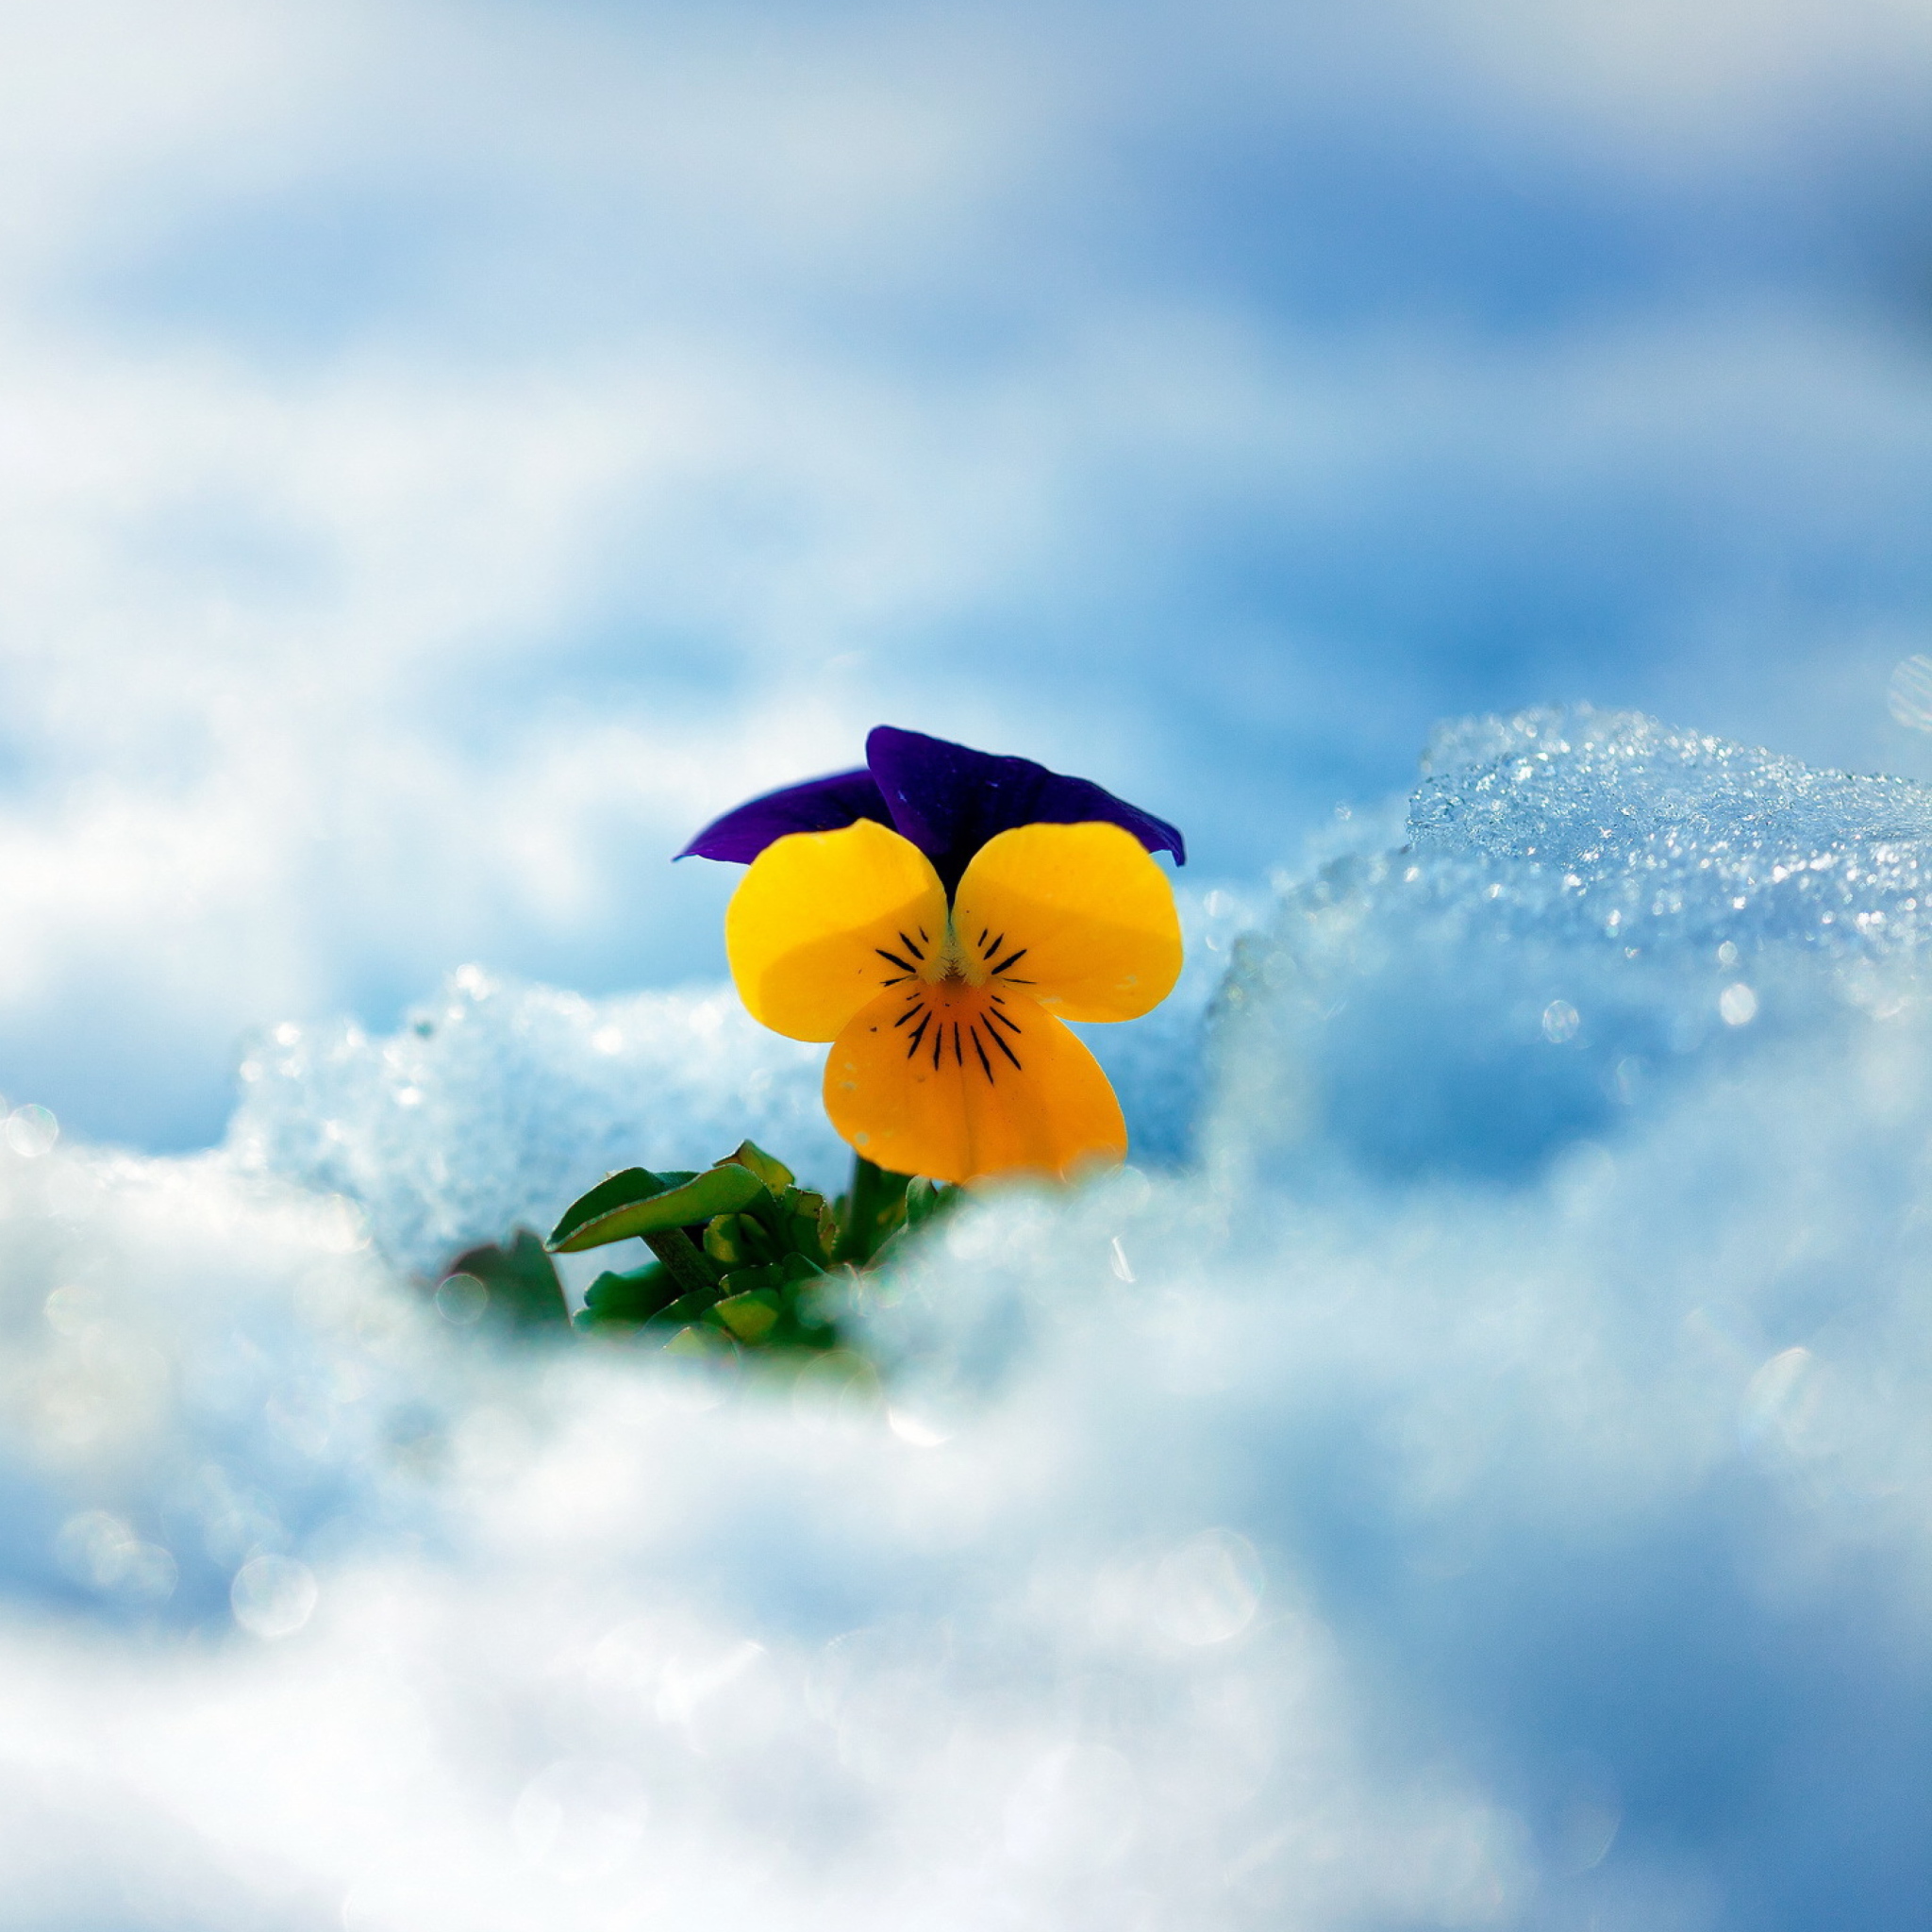 Little Yellow Flower In Snow wallpaper 2048x2048